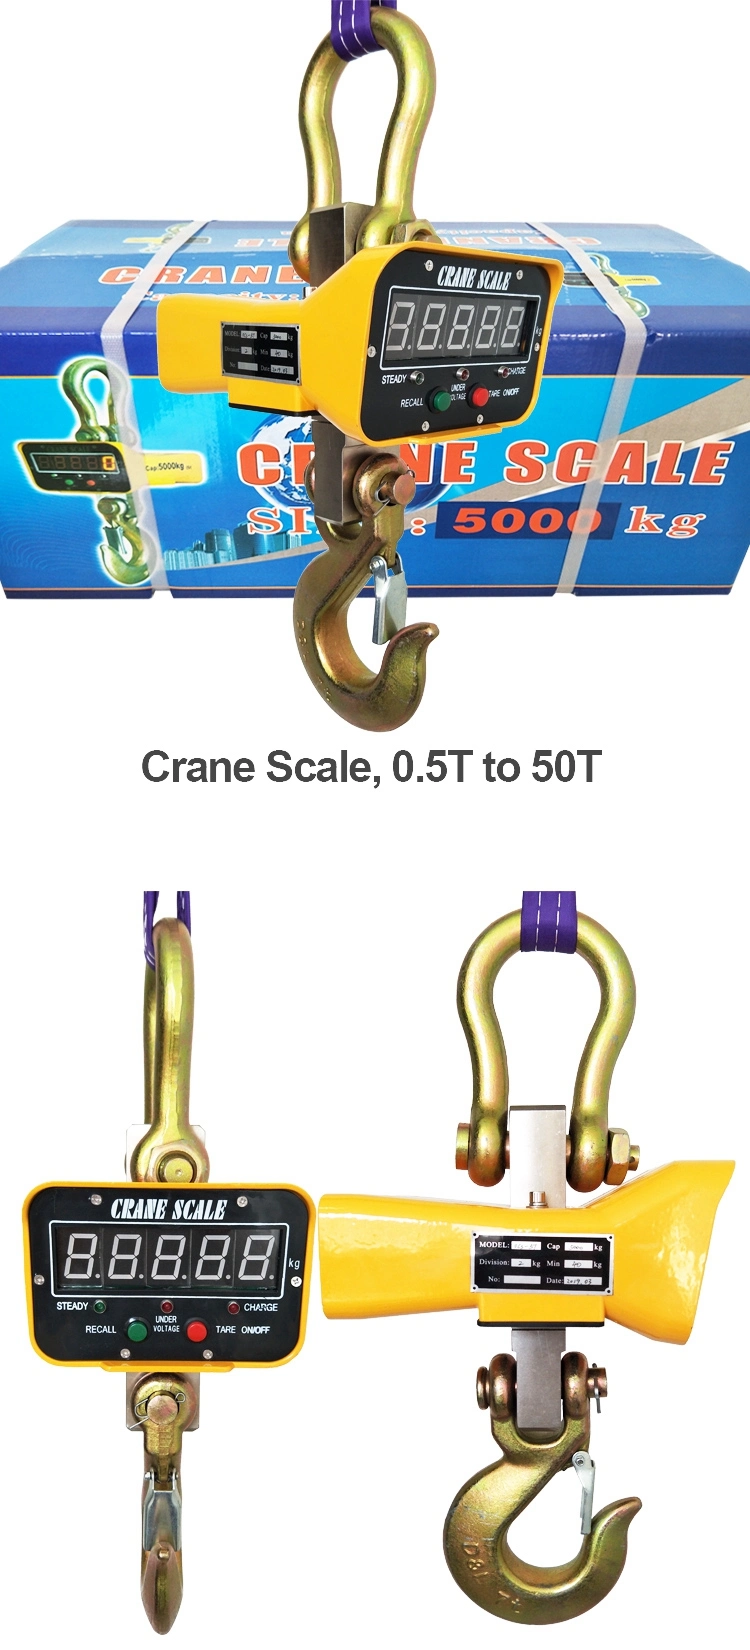 Crane Scale Digital Crane Scale Electronic Balance 20 Ton